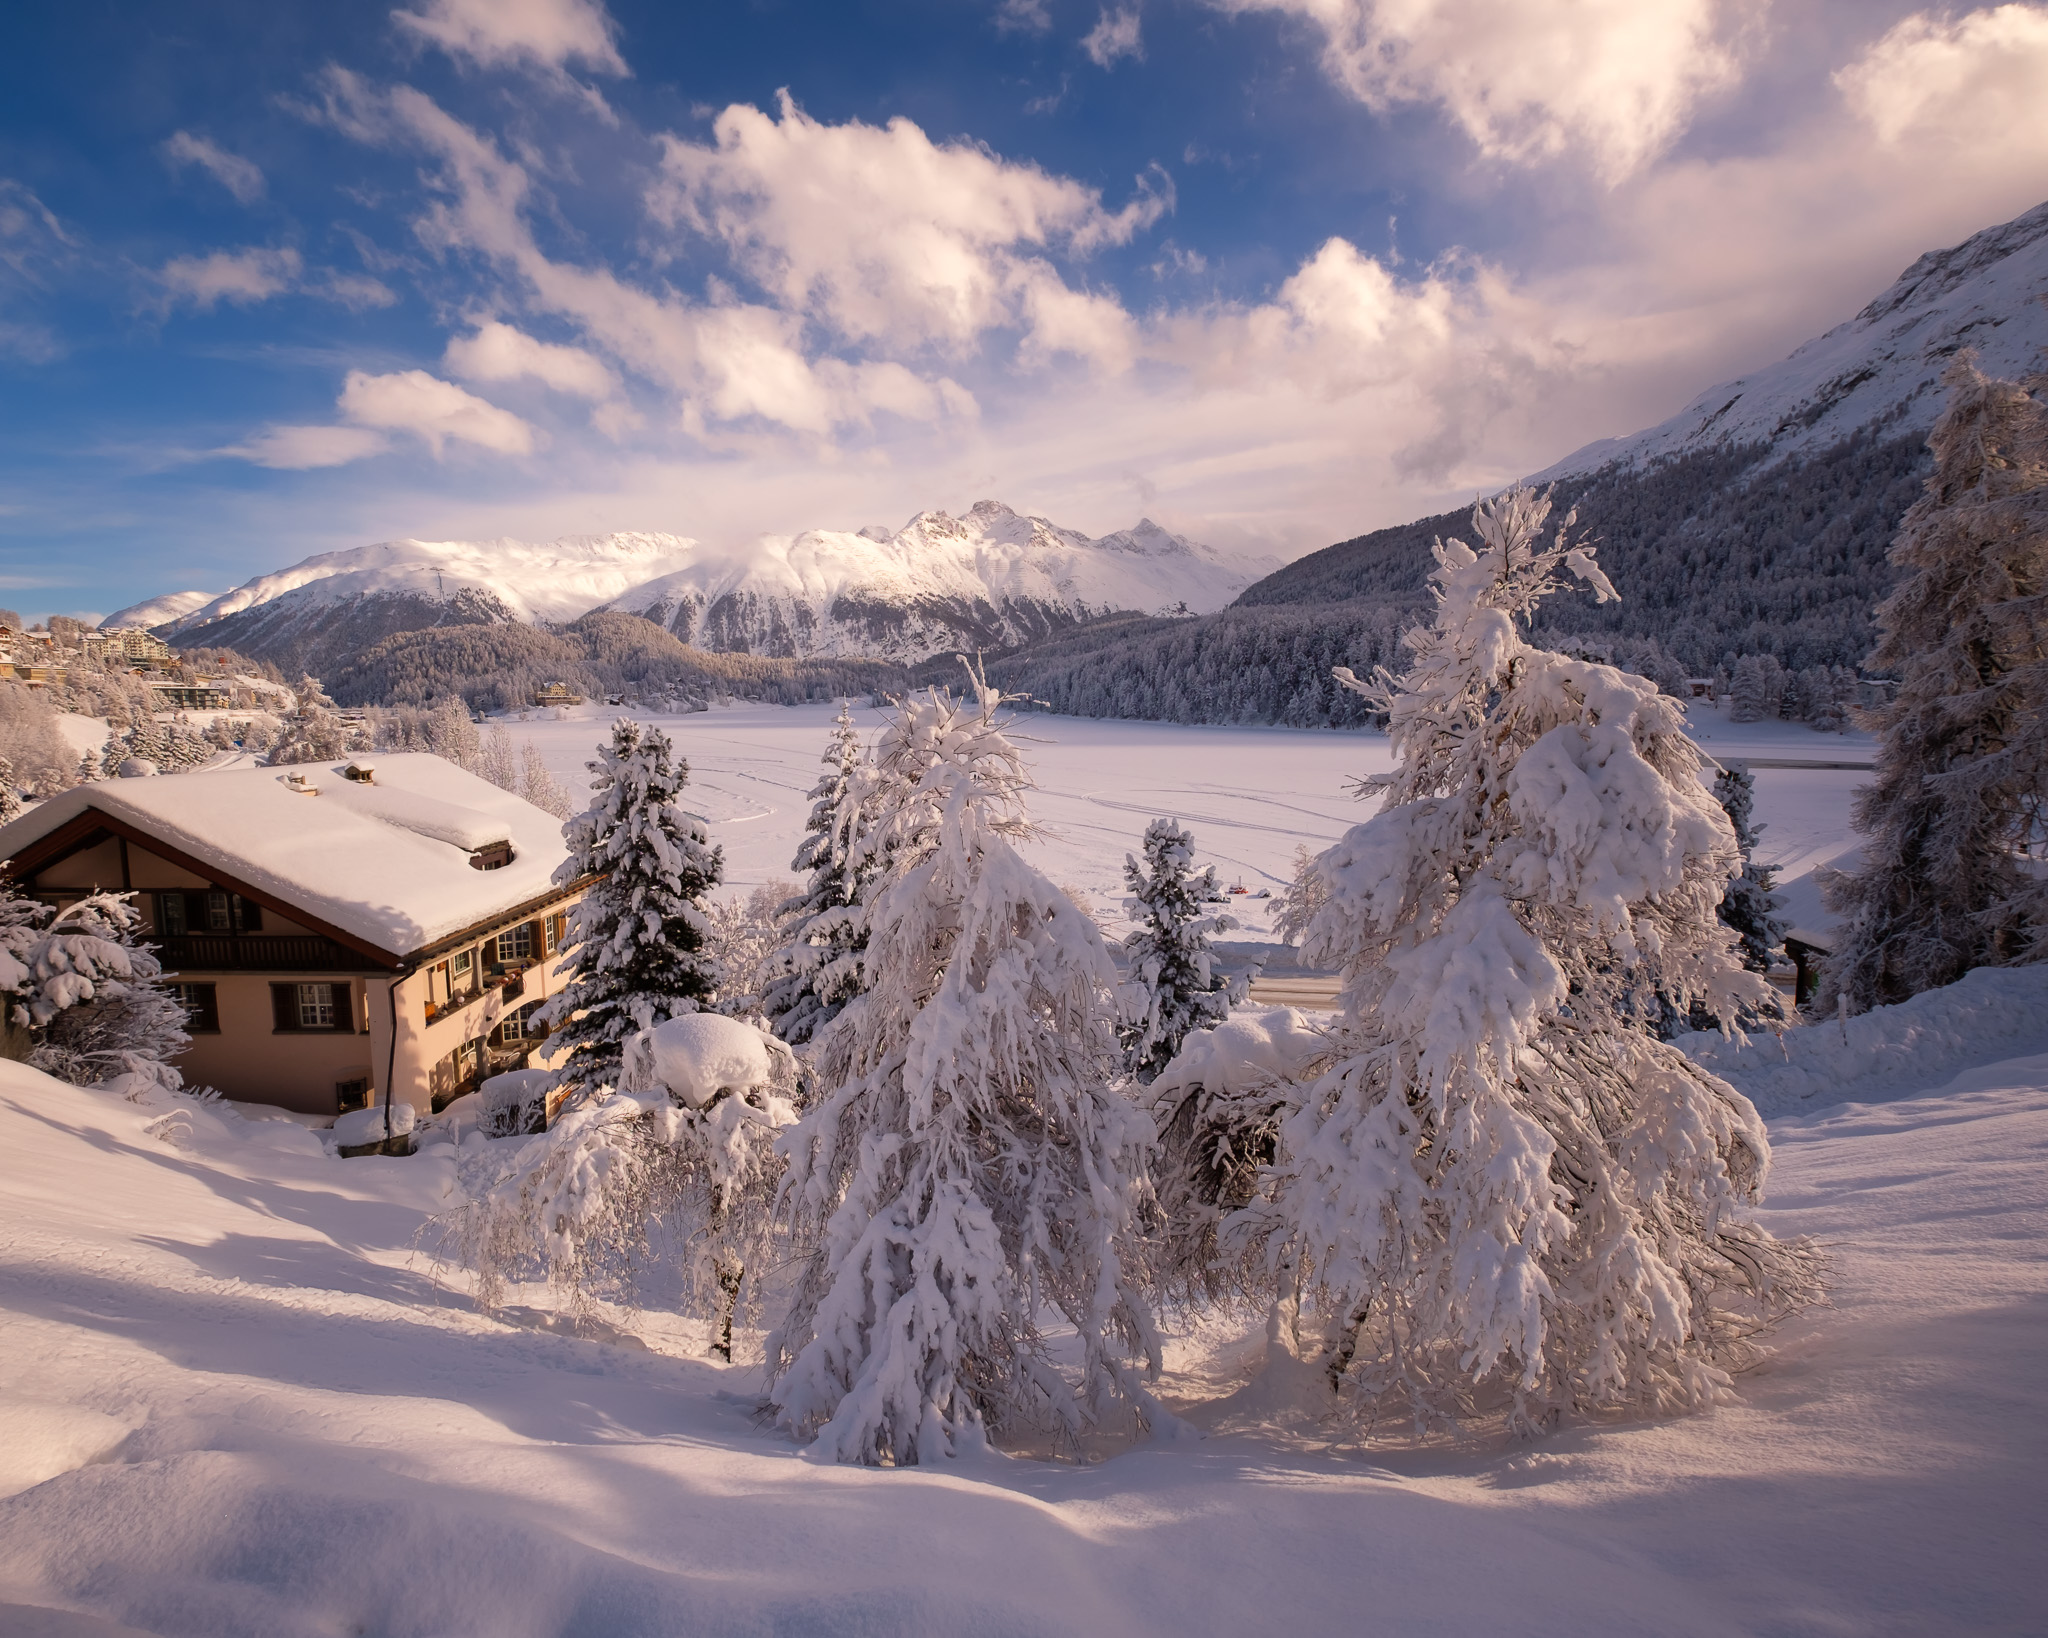 St-Moritz-on-the-Sunny-Day-Switzerland.jpg